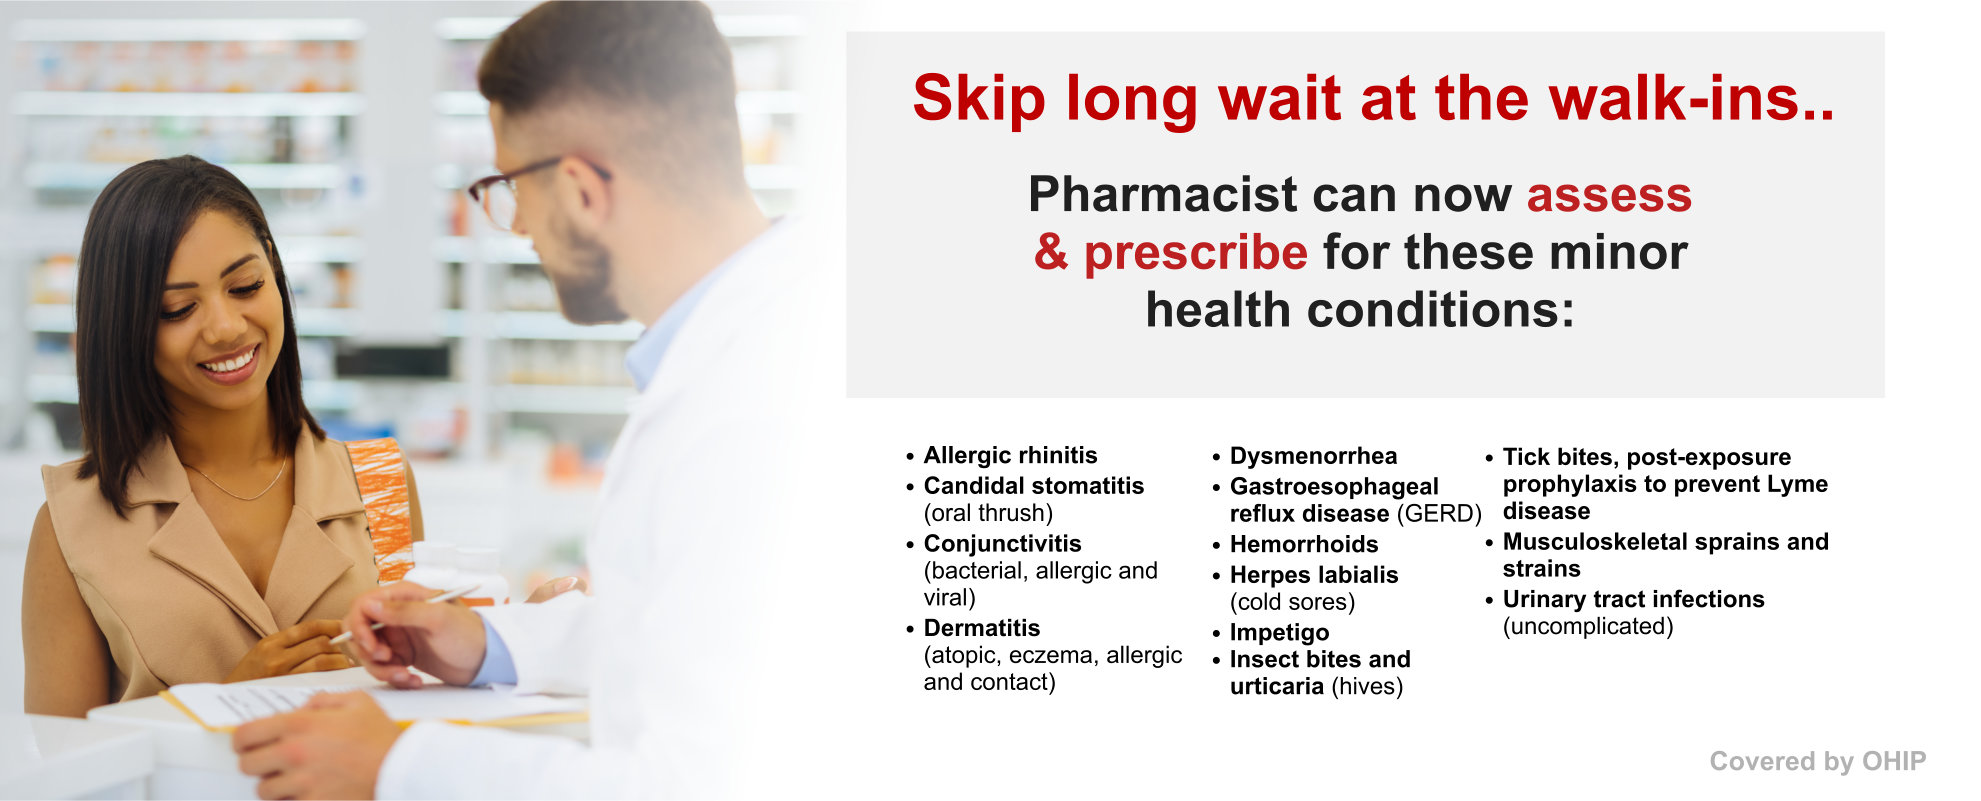 prescribing pharmacist for minor ailments in burlington